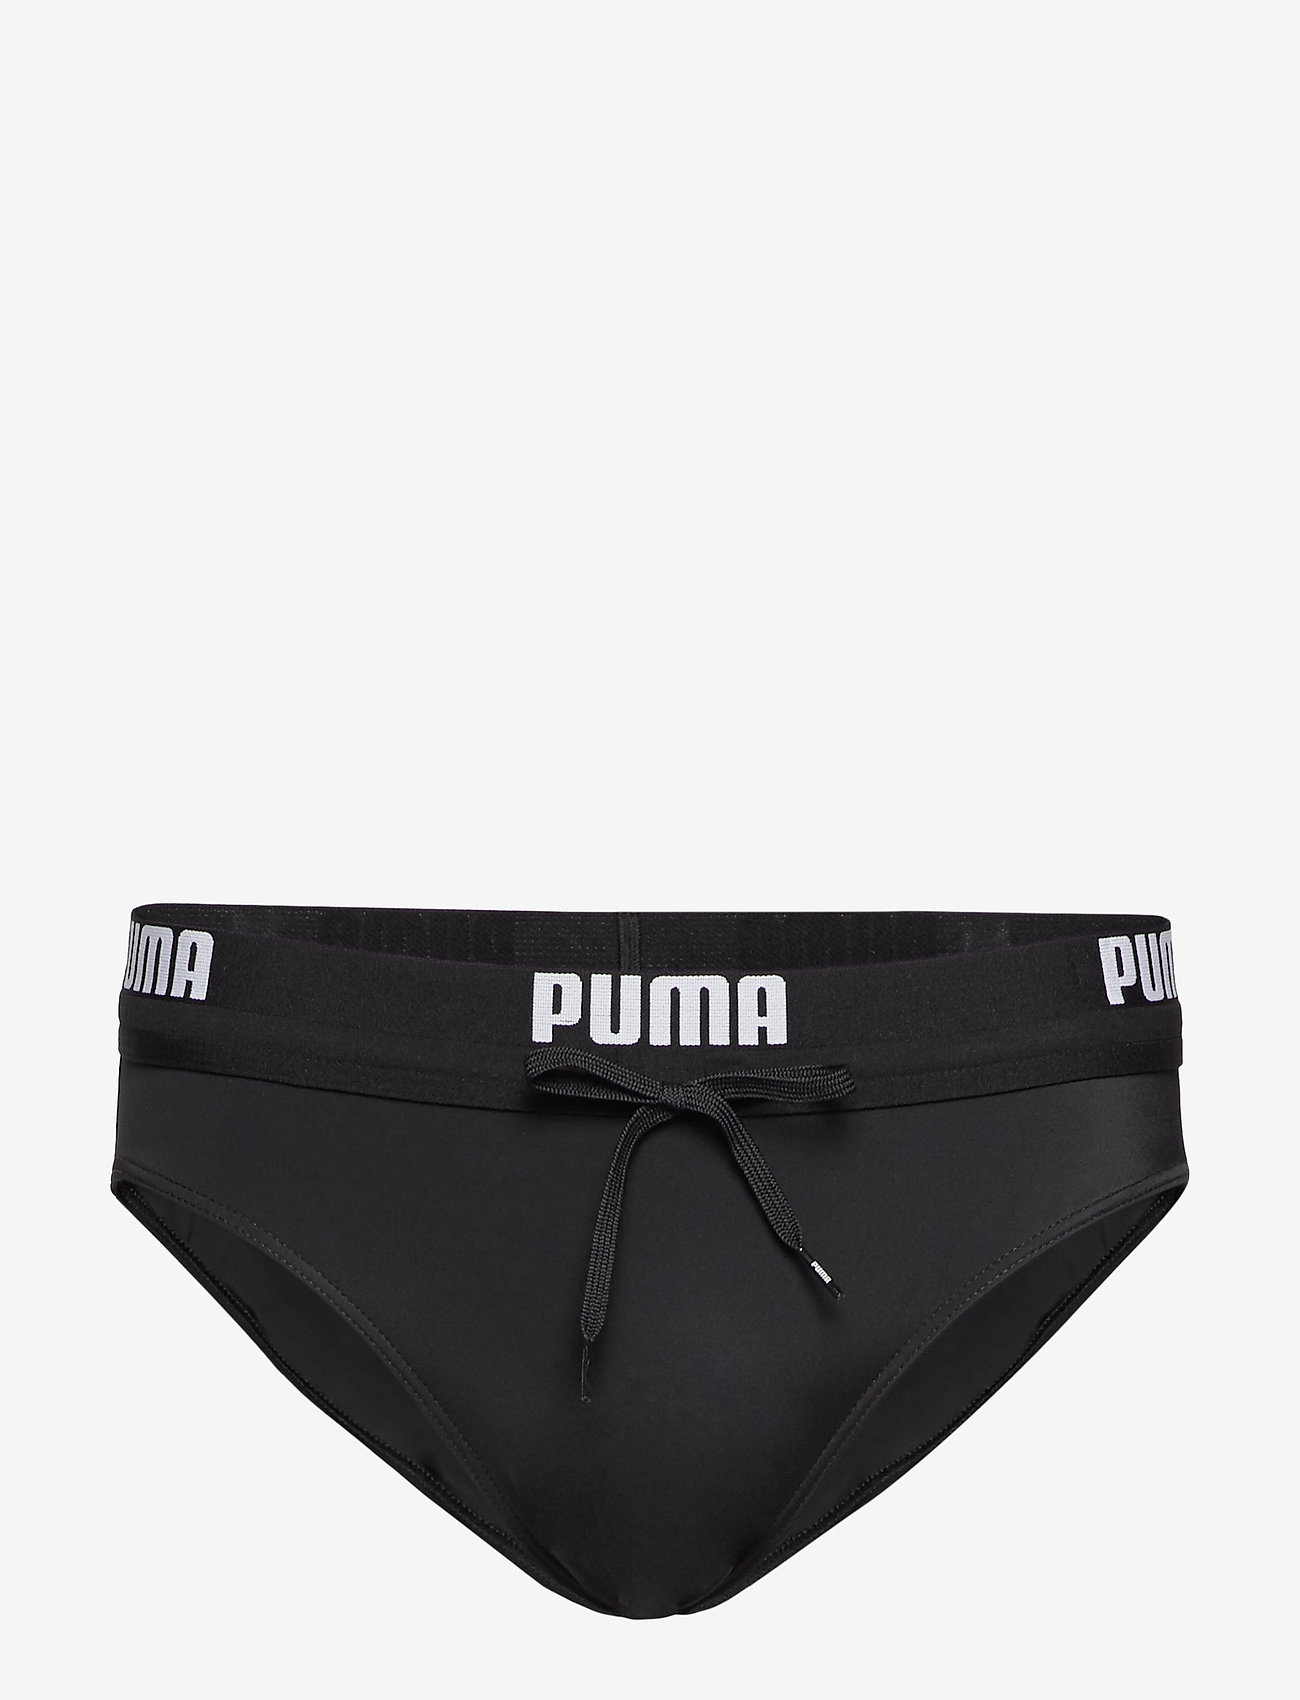 puma swim briefs